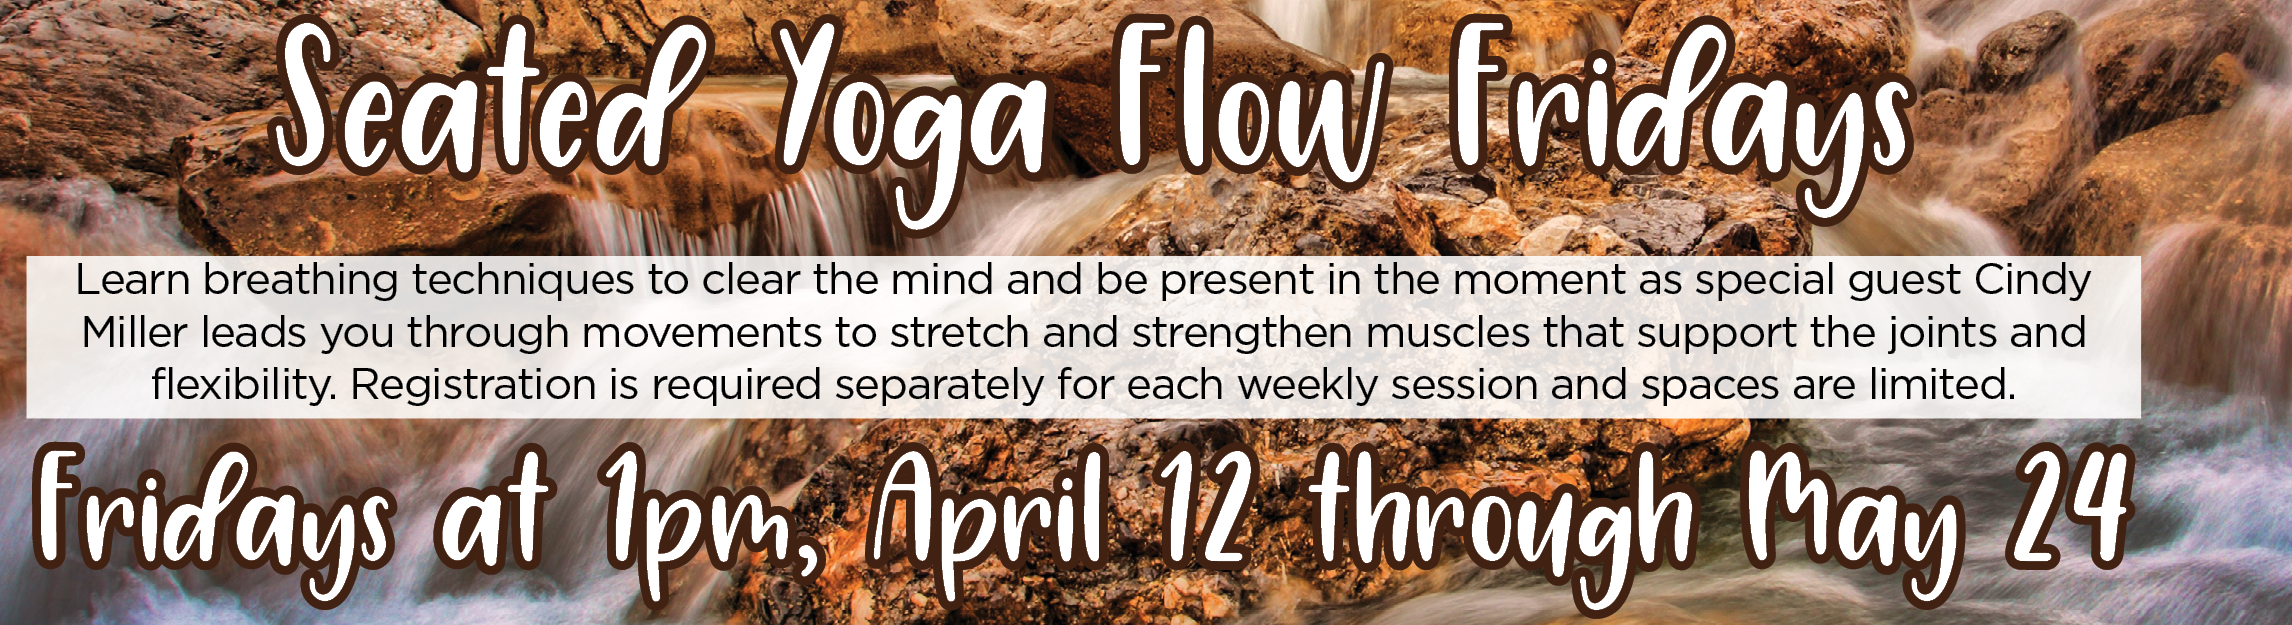 Seated Yoga Flow Fridays